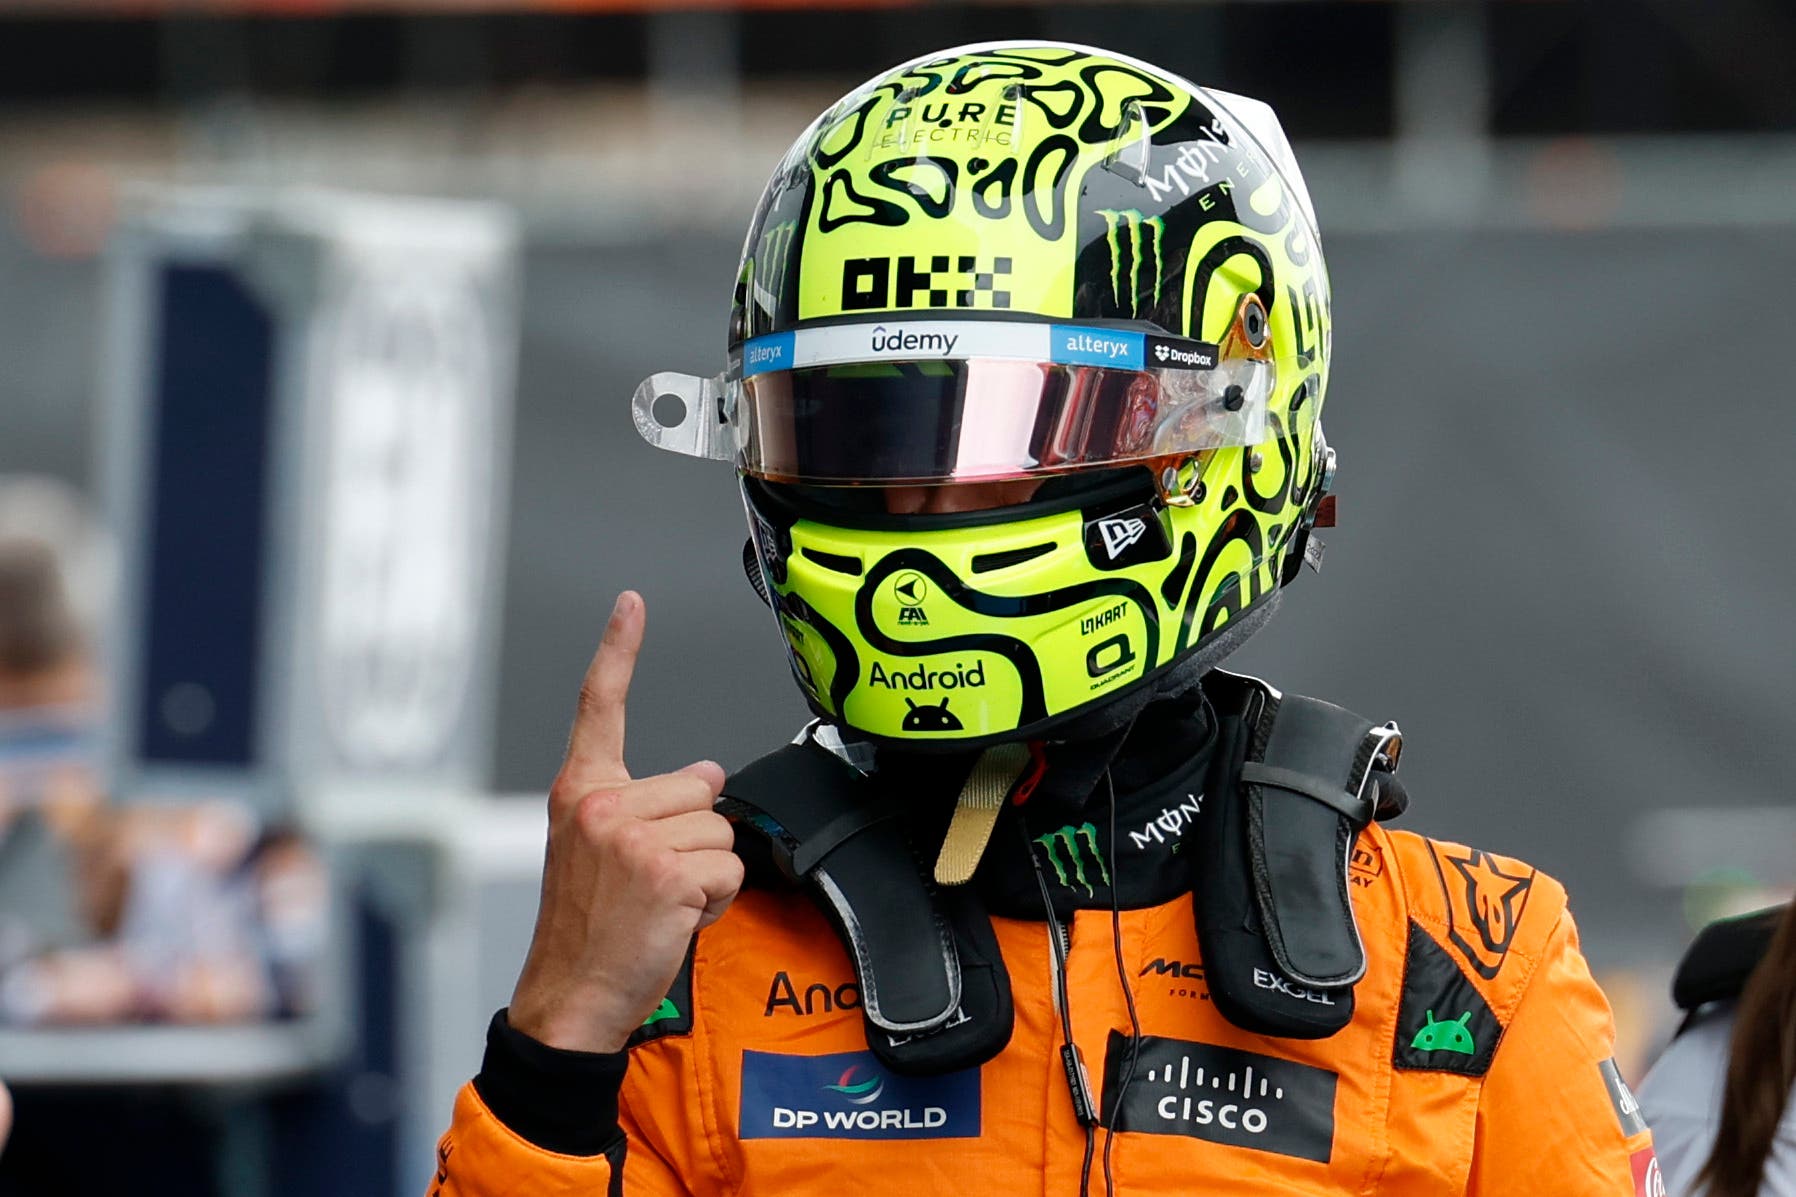 McLaren’s Lando Norris qualified on pole position at the Spanish Grand Prix (Joan Monfort/AP)